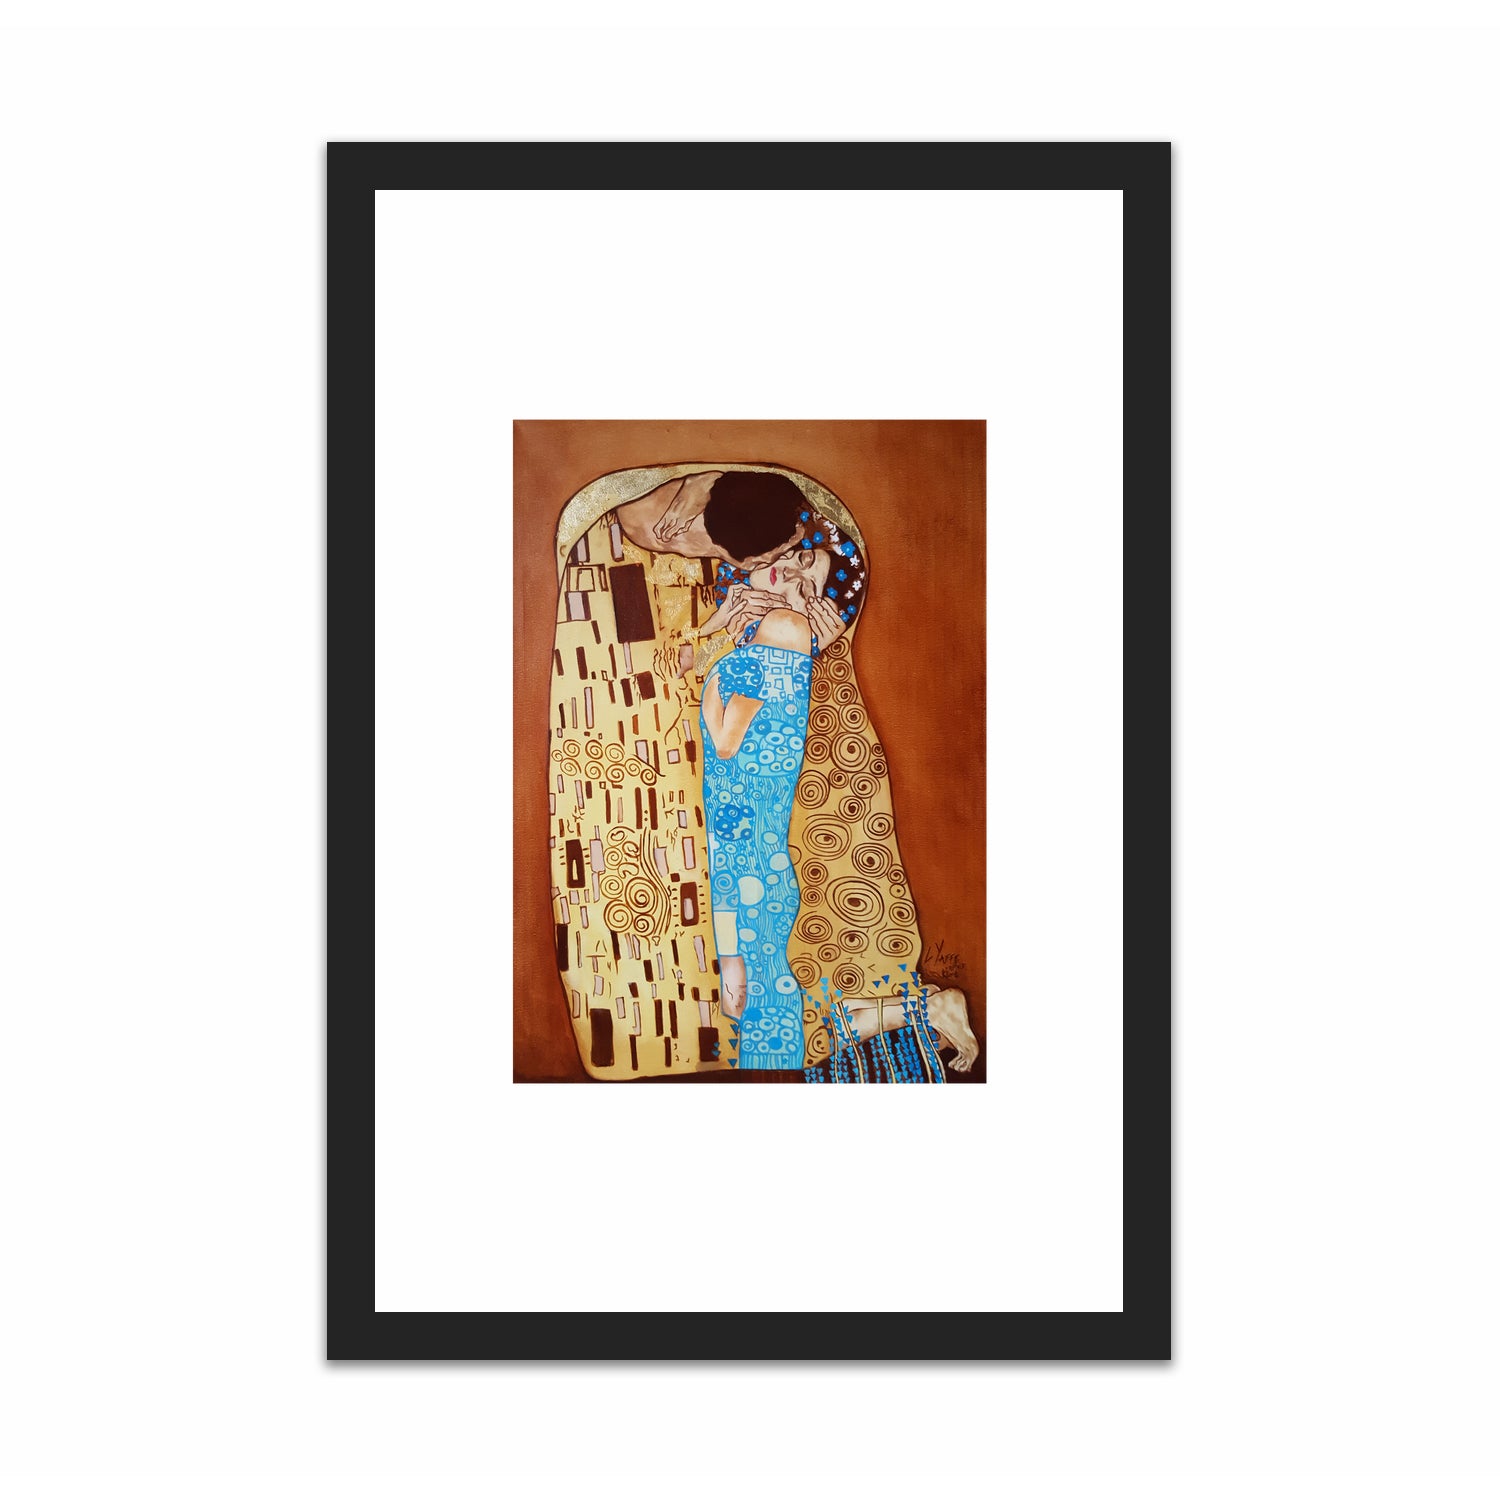 The Kiss after Gustav Klimt